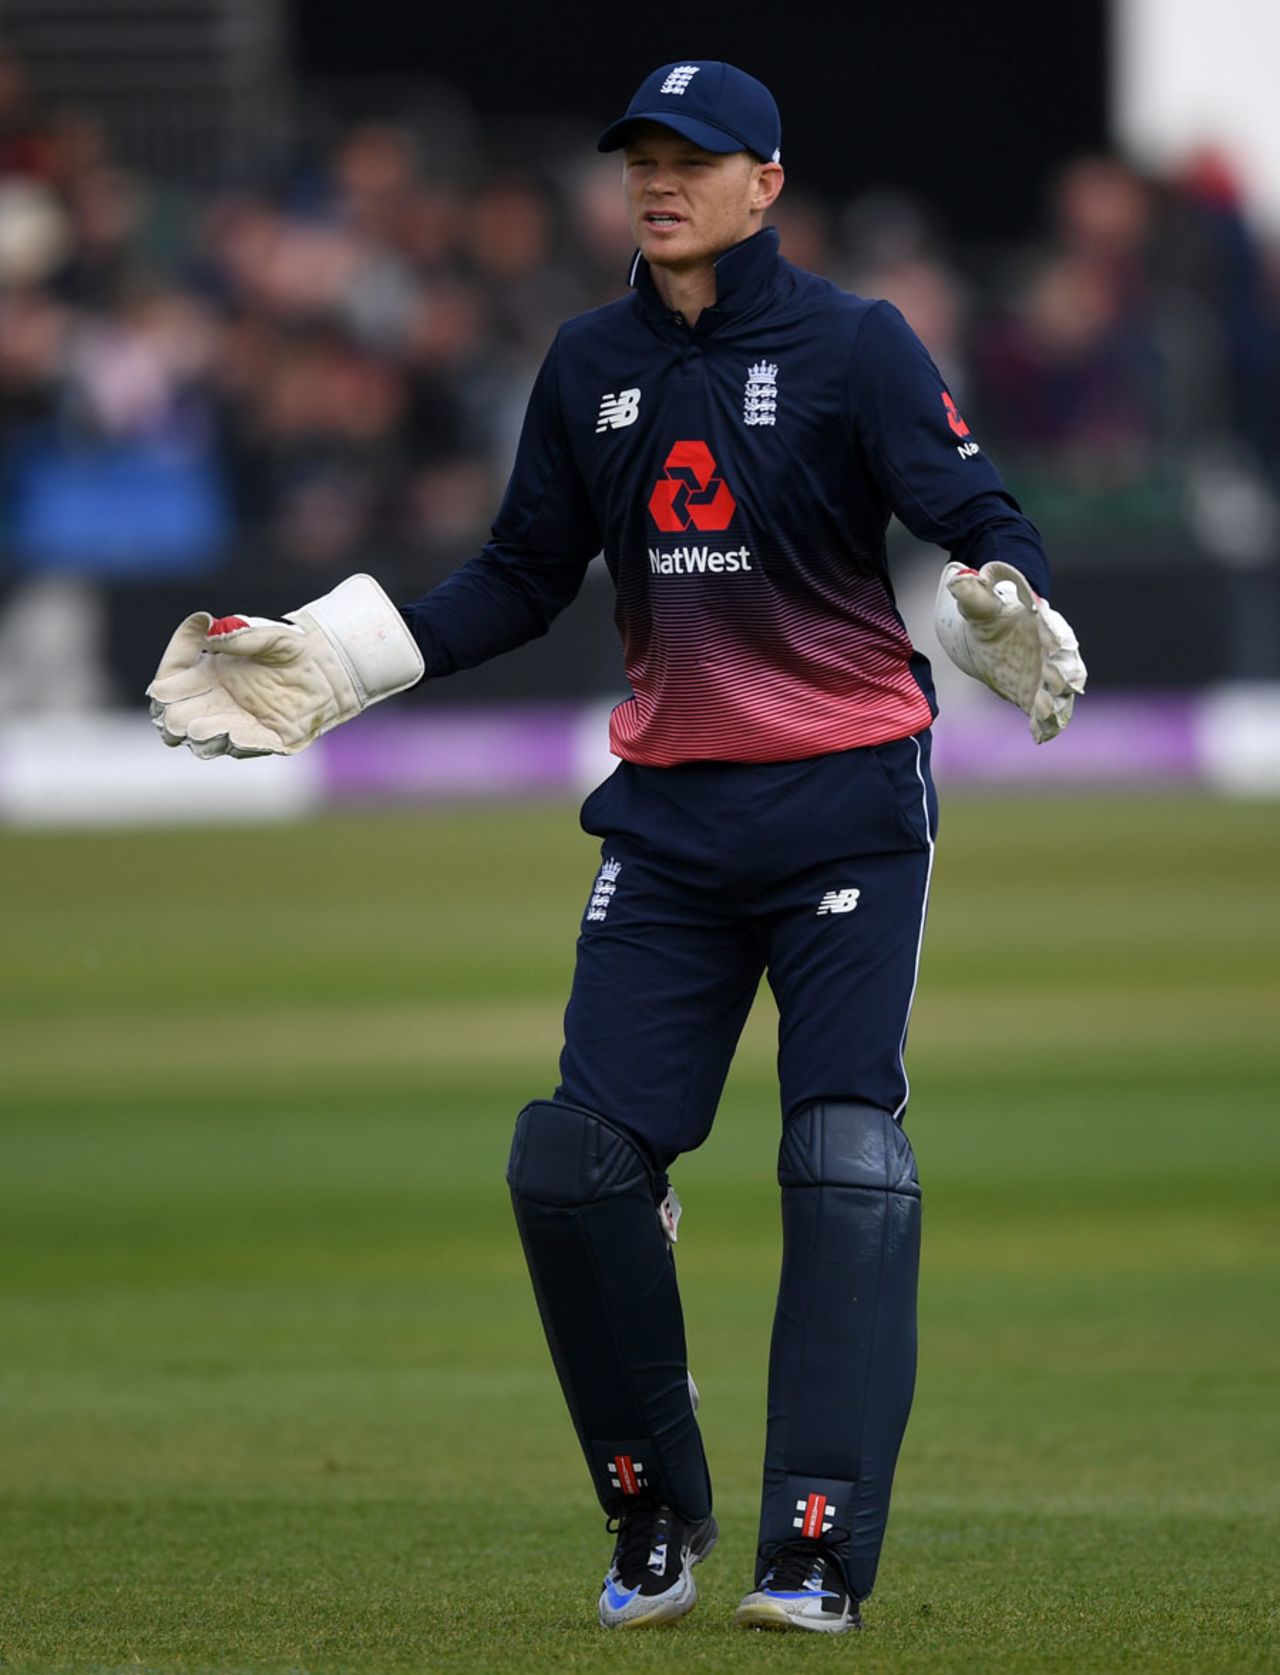 Sam Billings took the wicketkeeping gloves, England v Ireland, 1st ODI, Bristol, May 5, 2017